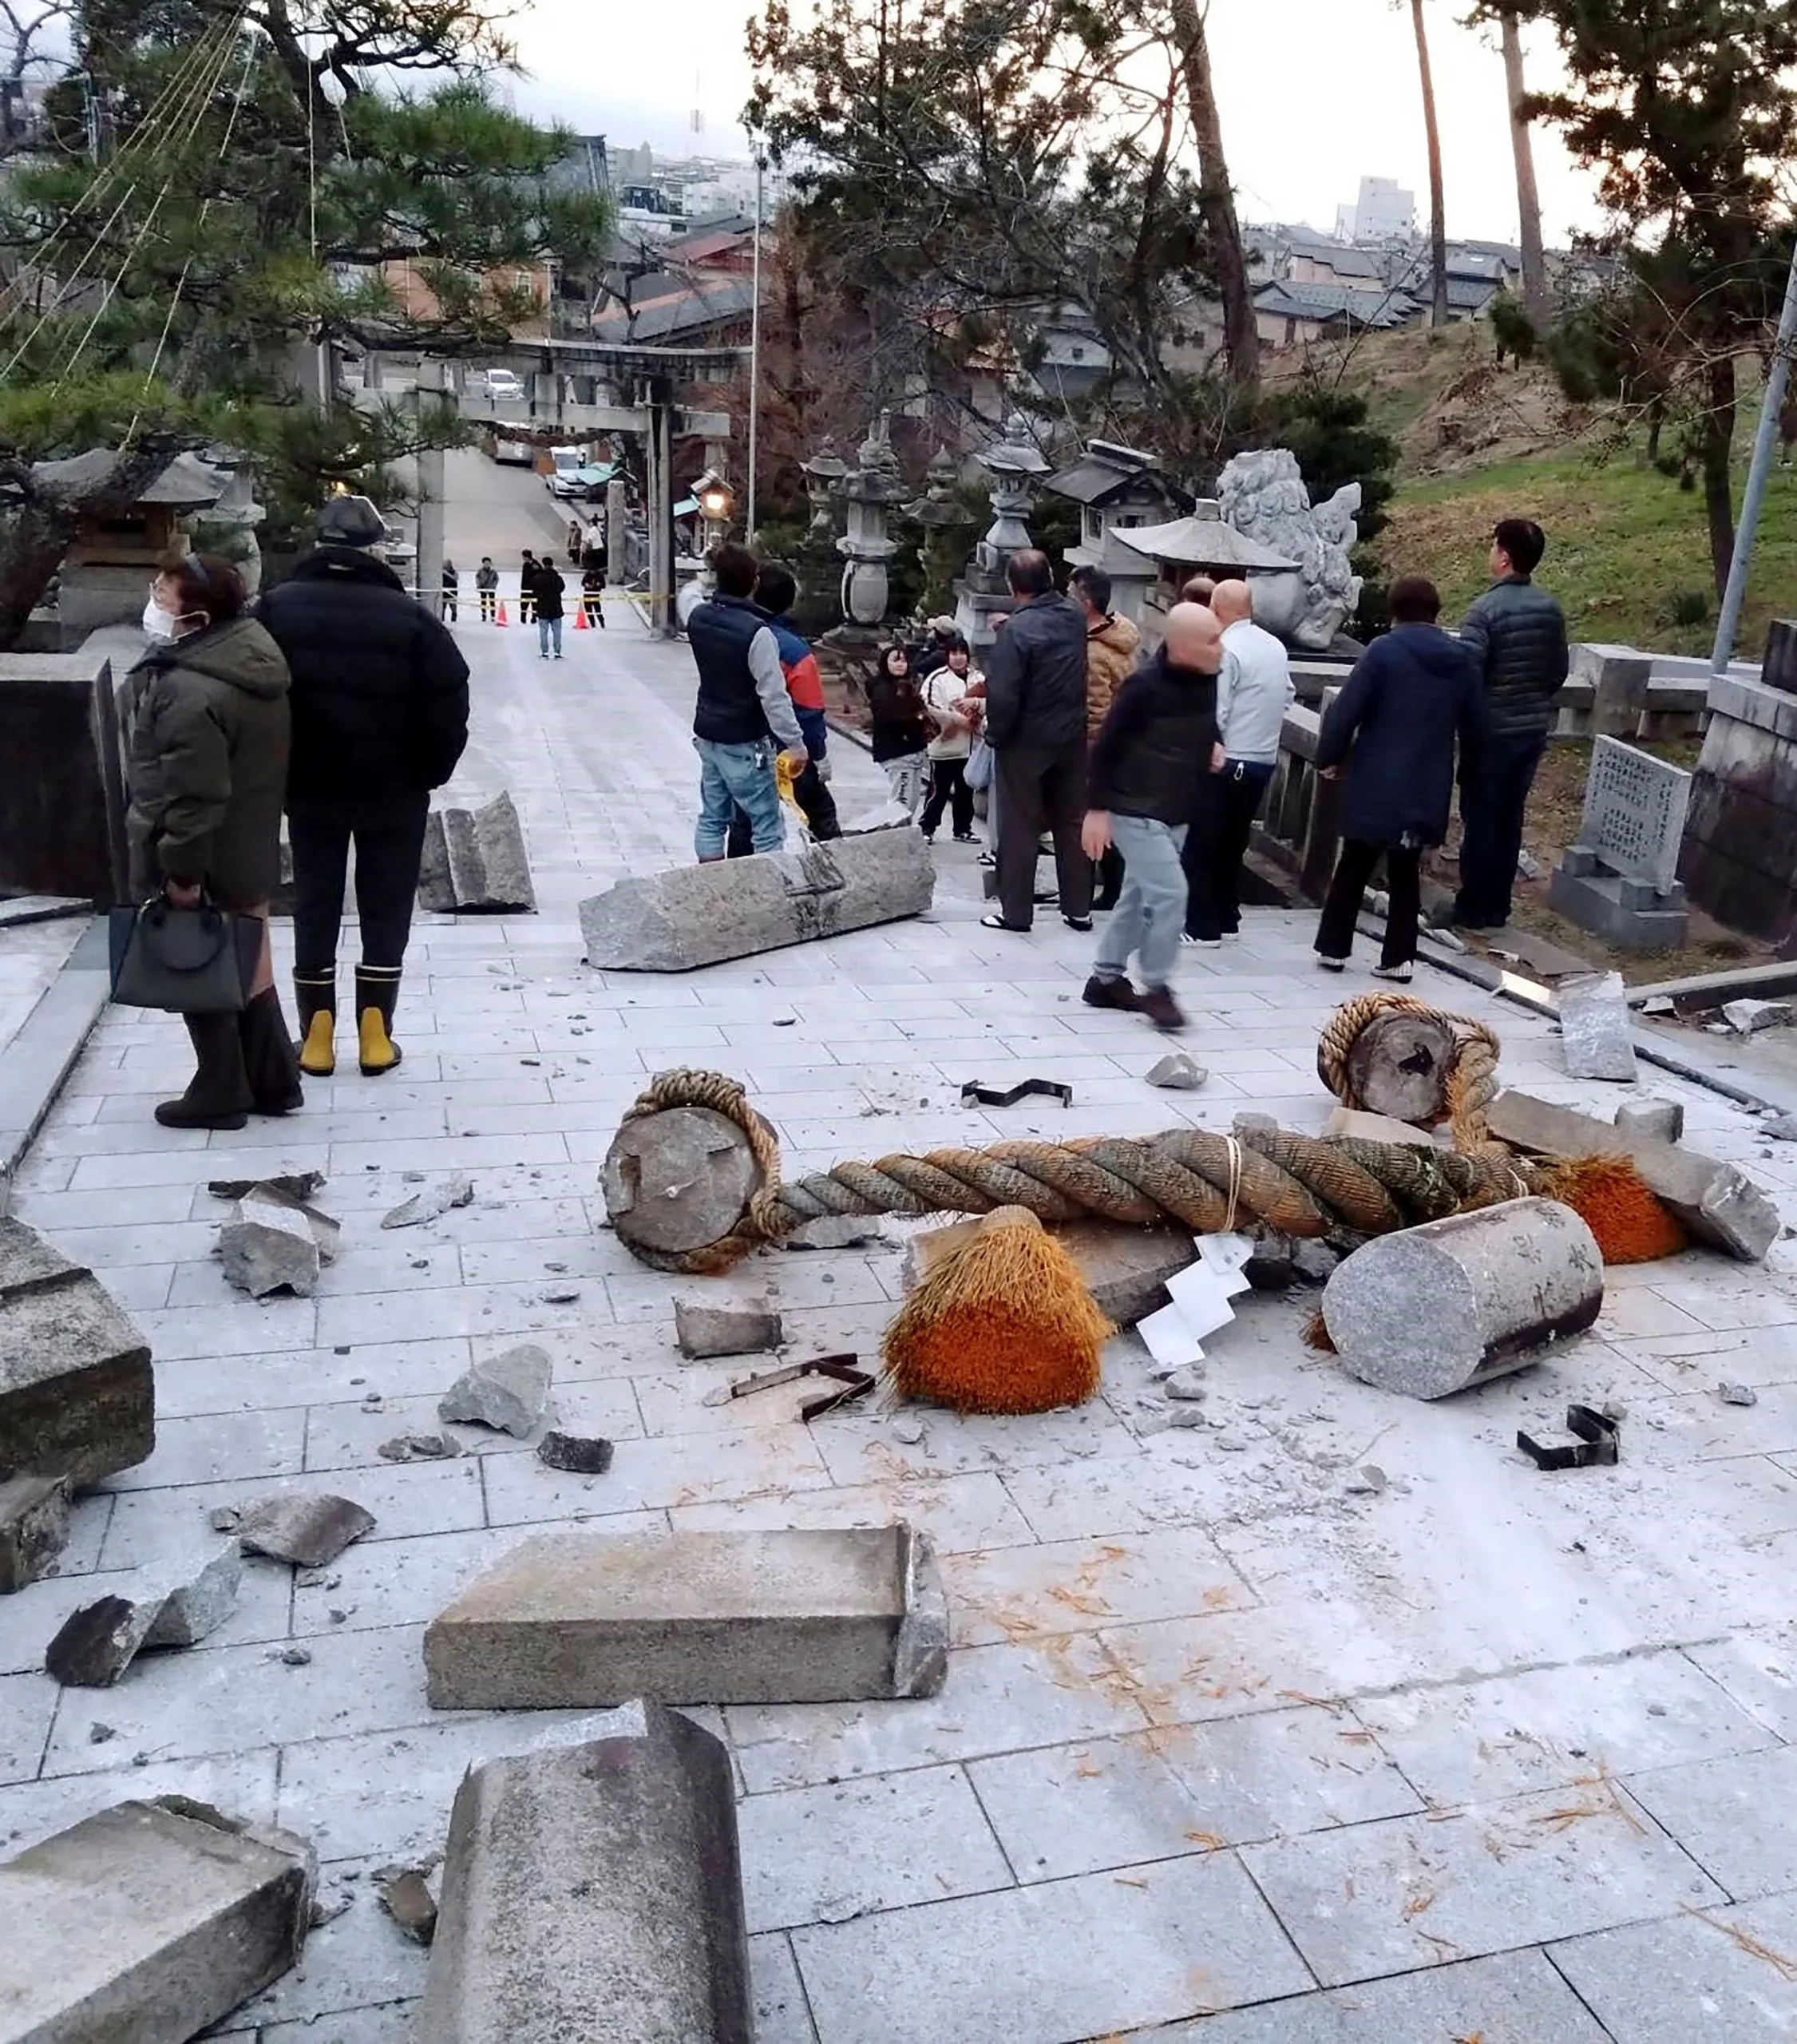 Earthquake in Japan